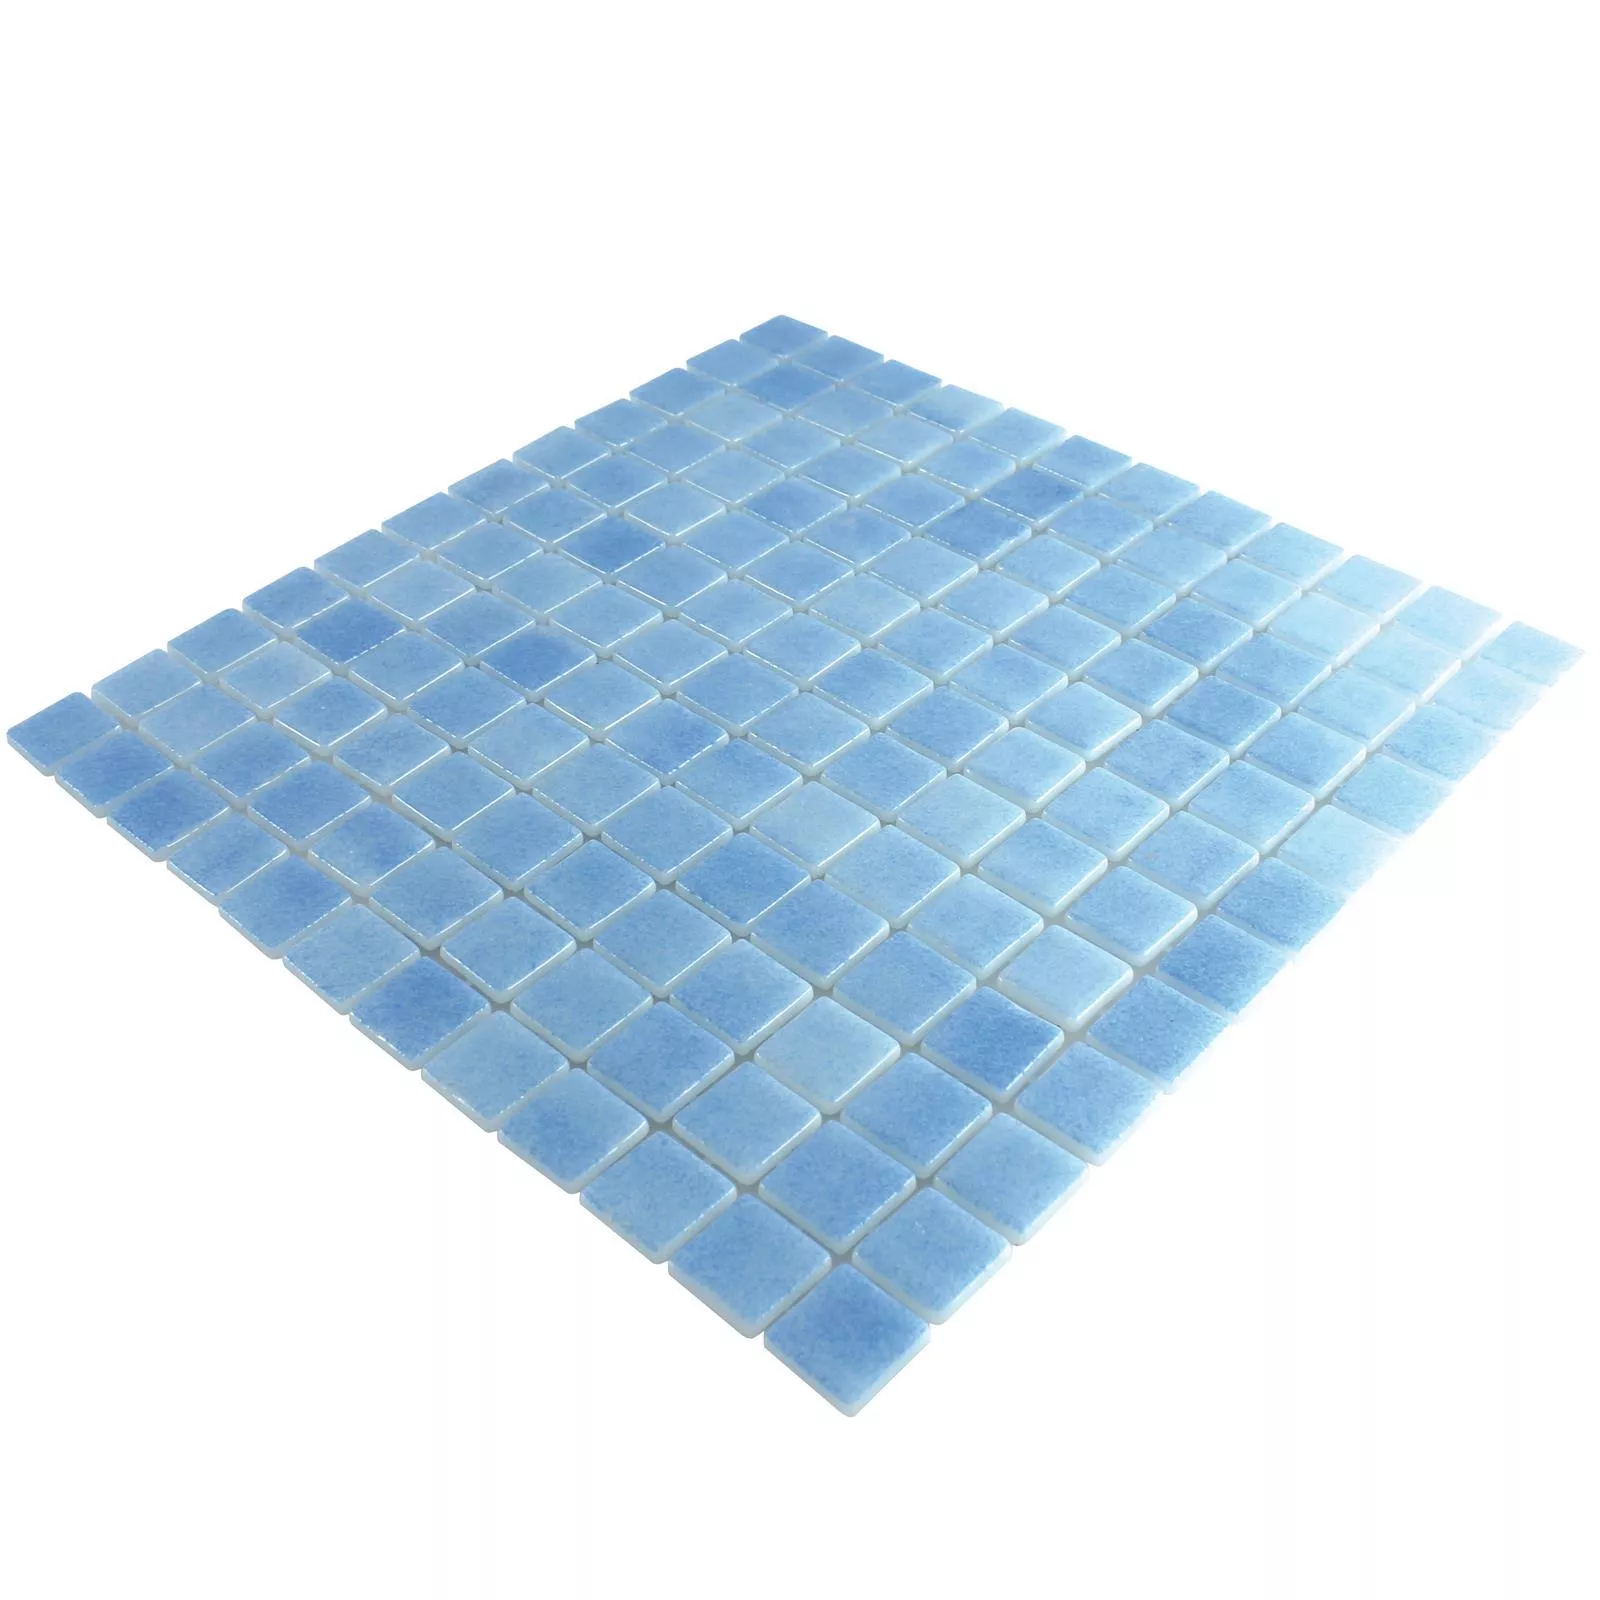 Glass Swimming Pool Mosaic Antonio Light Blue